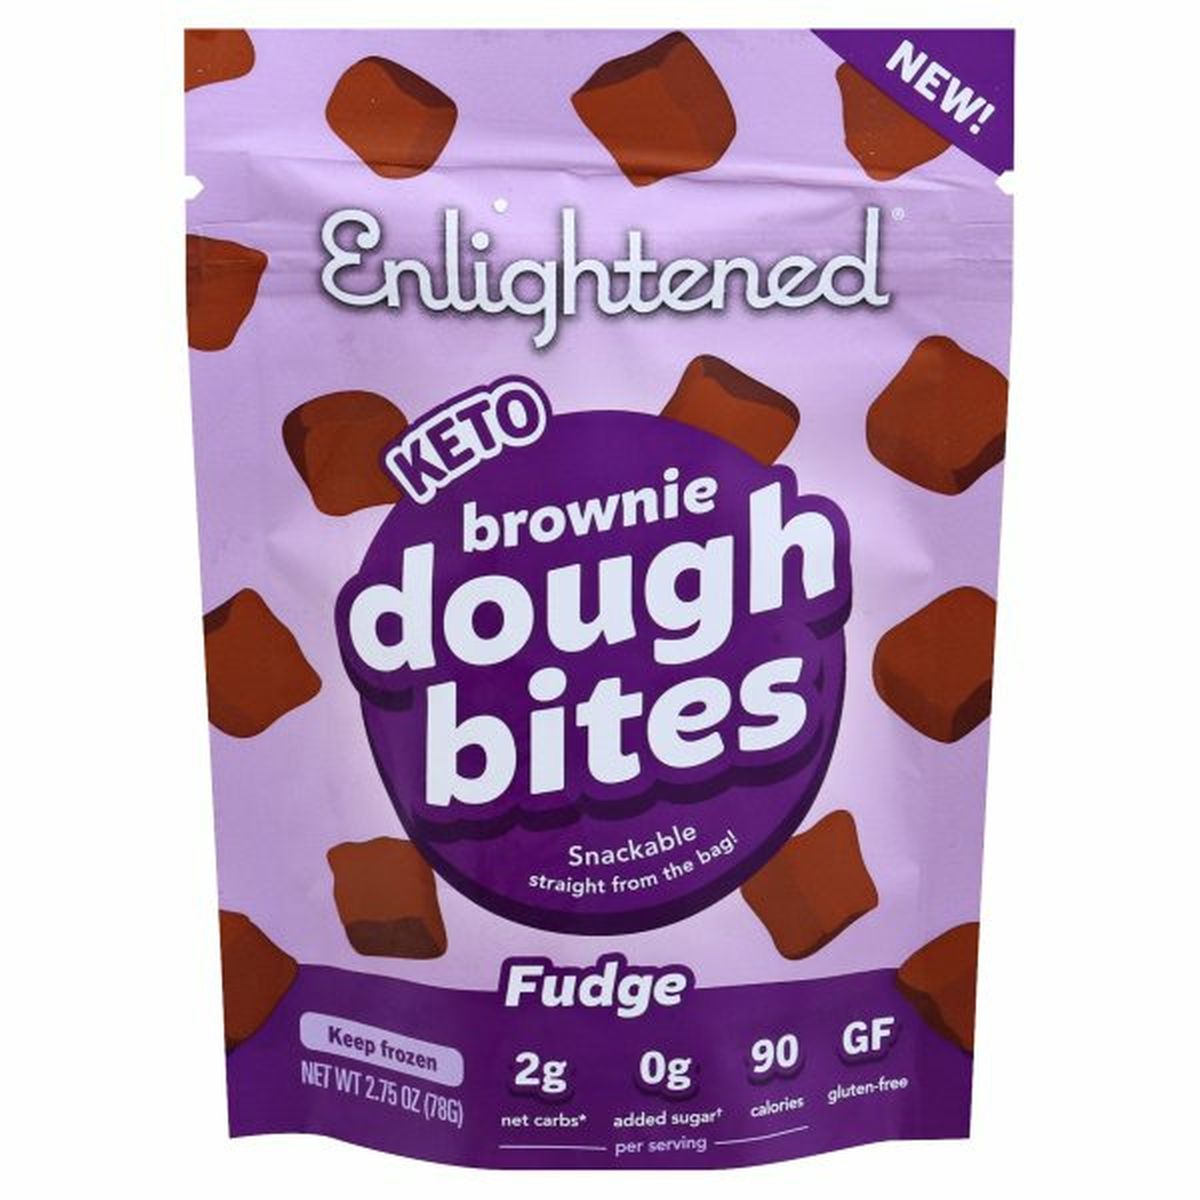 Calories in Enlightened Brownie Dough Bites, Keto, Fudge